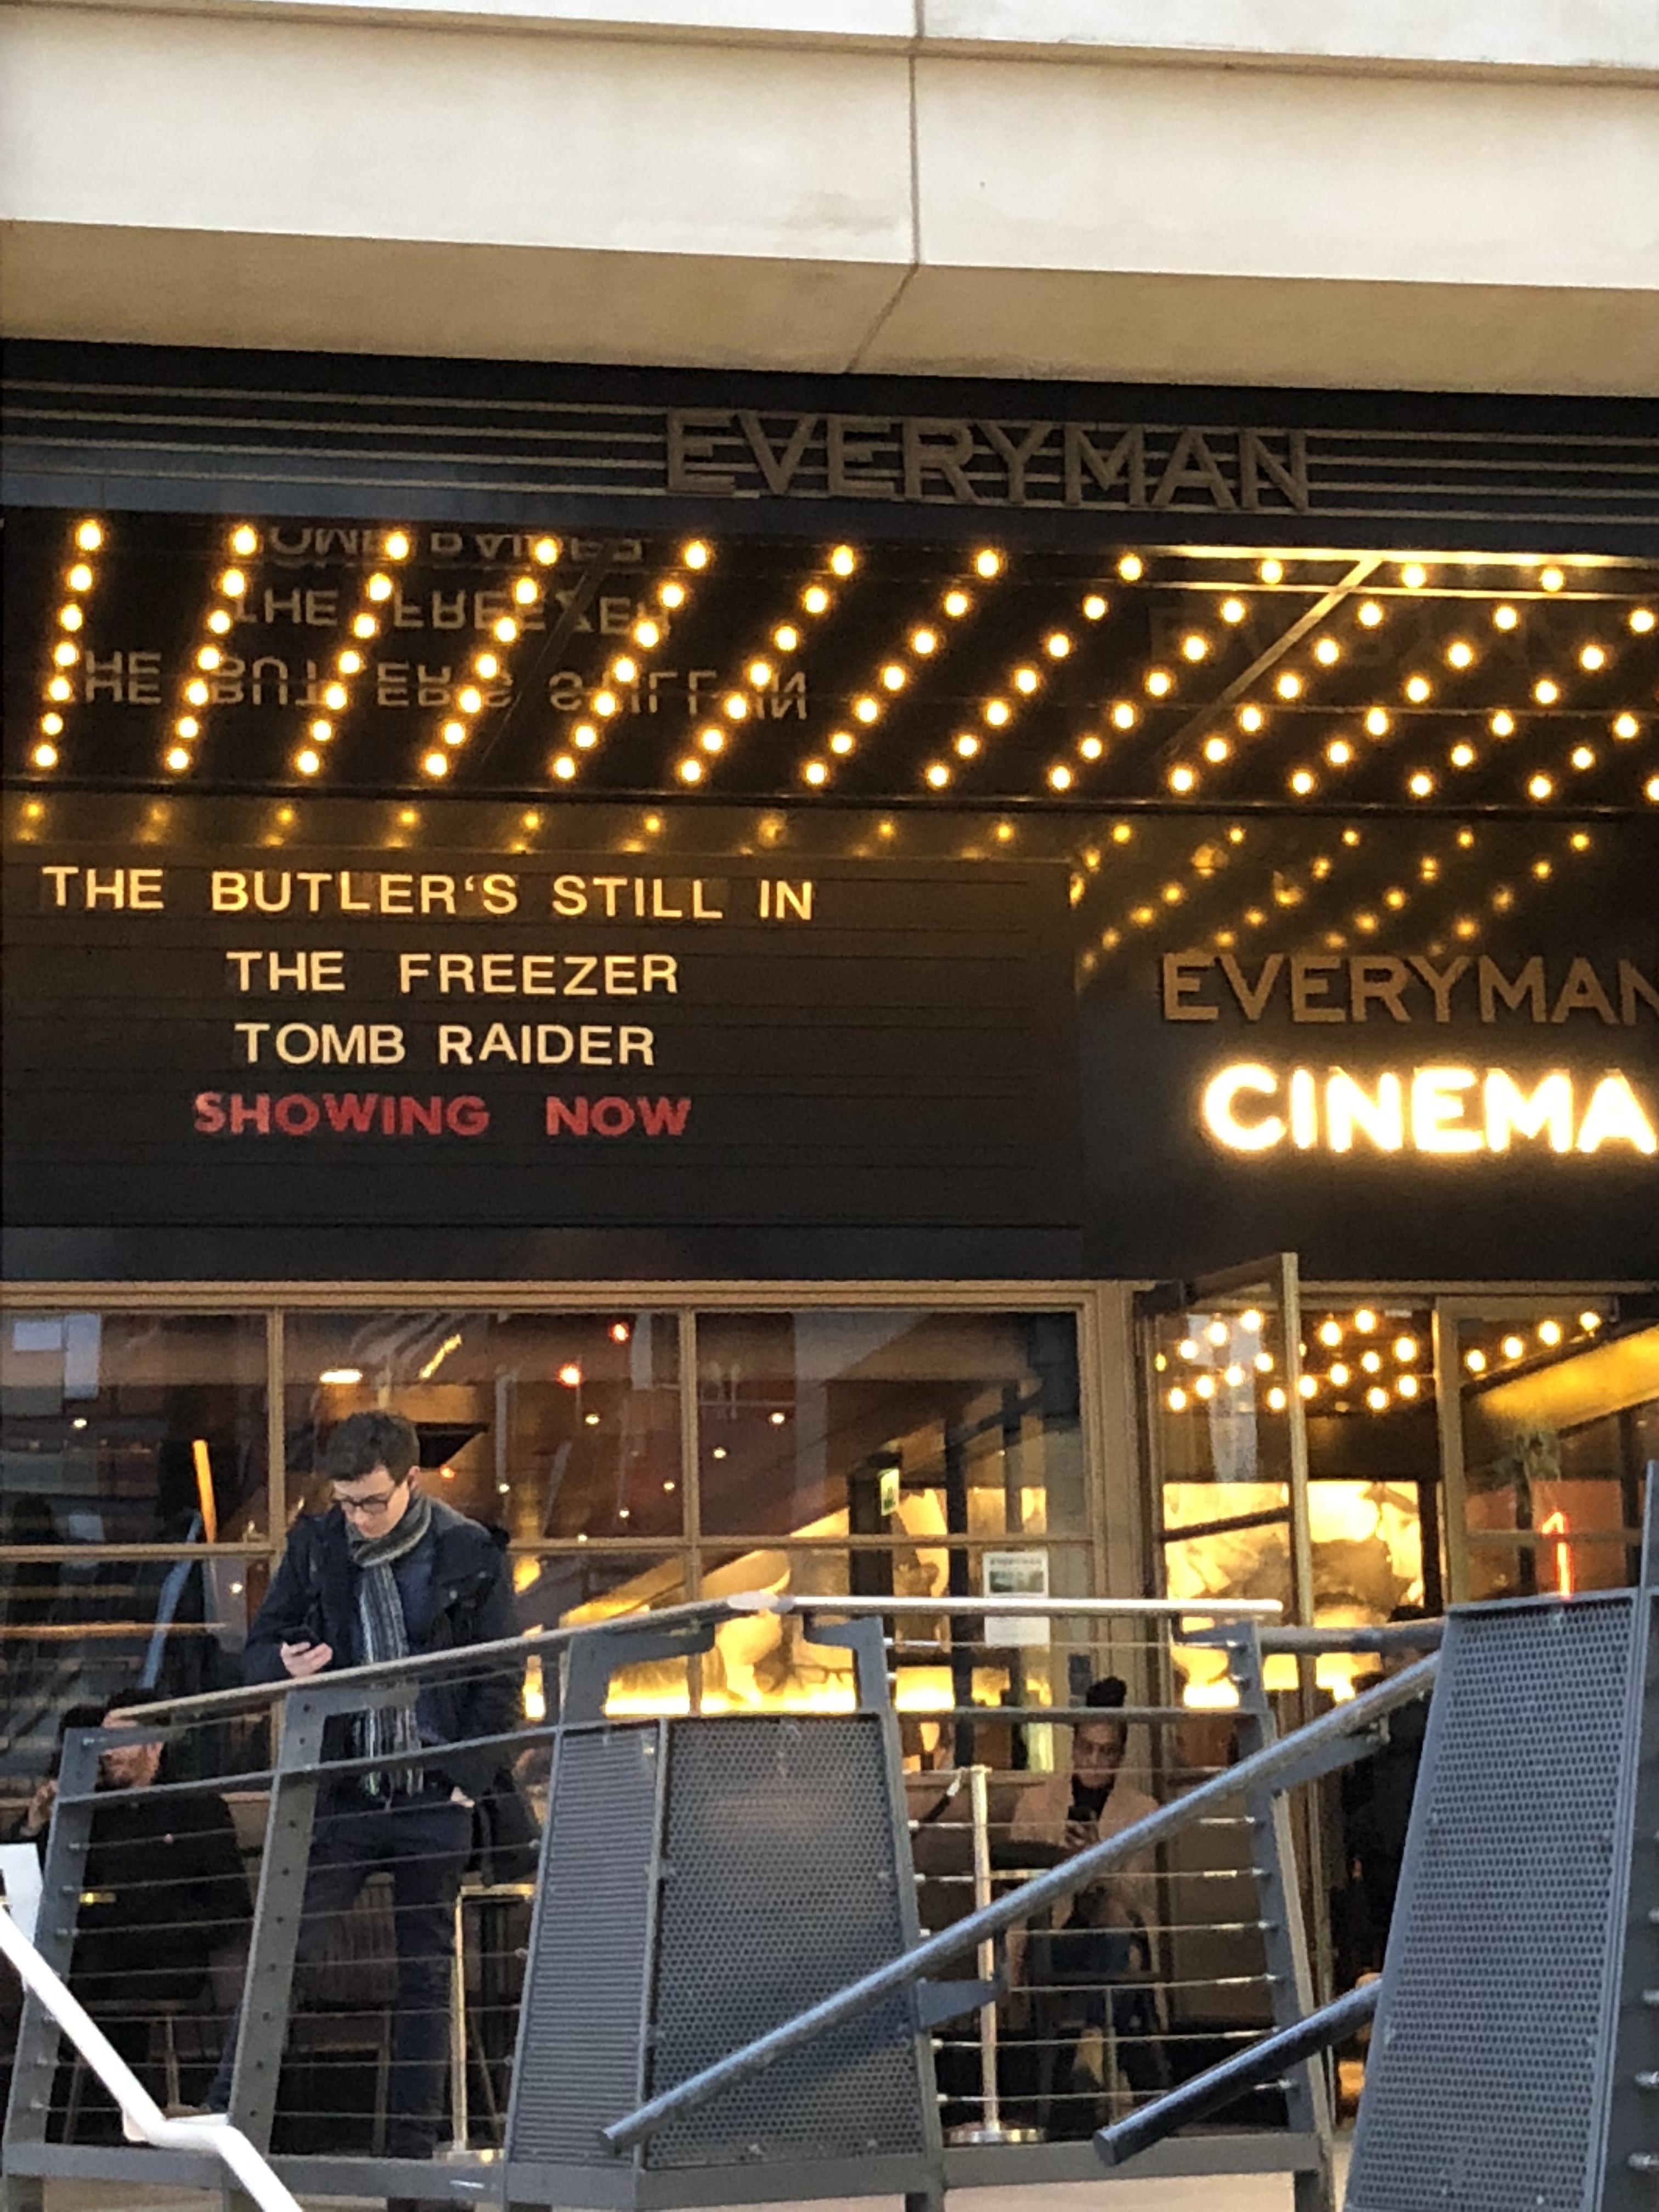 facade - Sovies Herehden Here The Butler'S Still In The Freezer Tomb Raider Showing Now Everyman Cinema